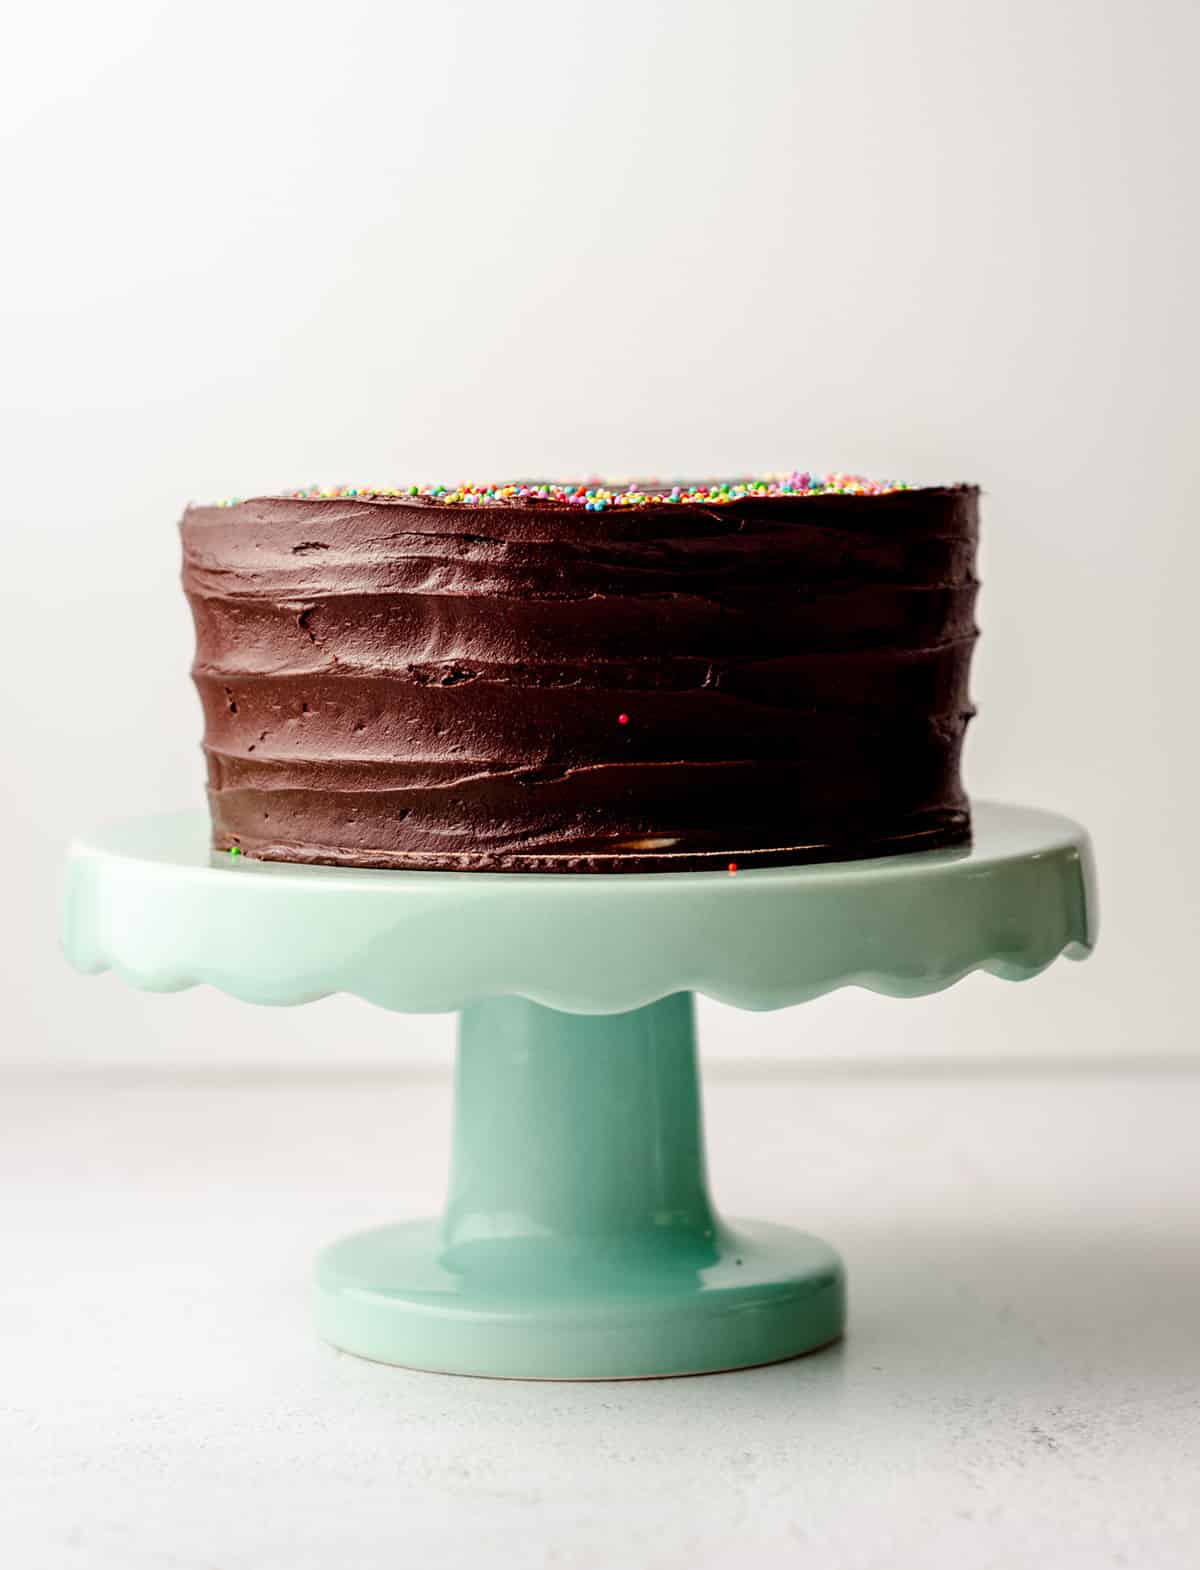 a small chocolate cake on an aqua cake stand